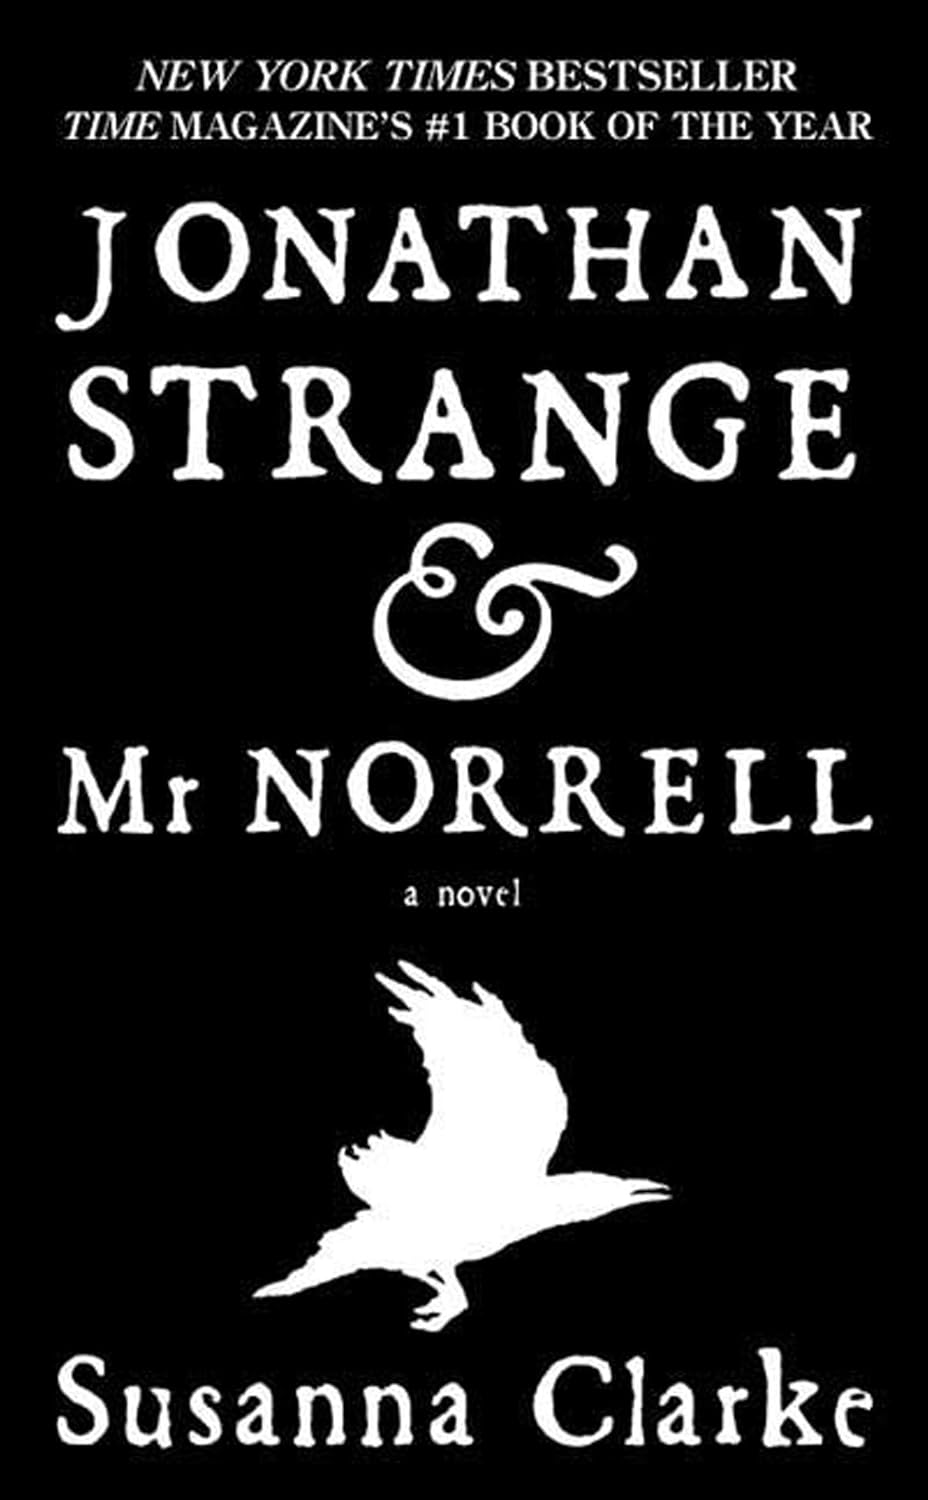 JONATHAN STRANGE & MR. NORRELL by SUSANNAH CLARKE